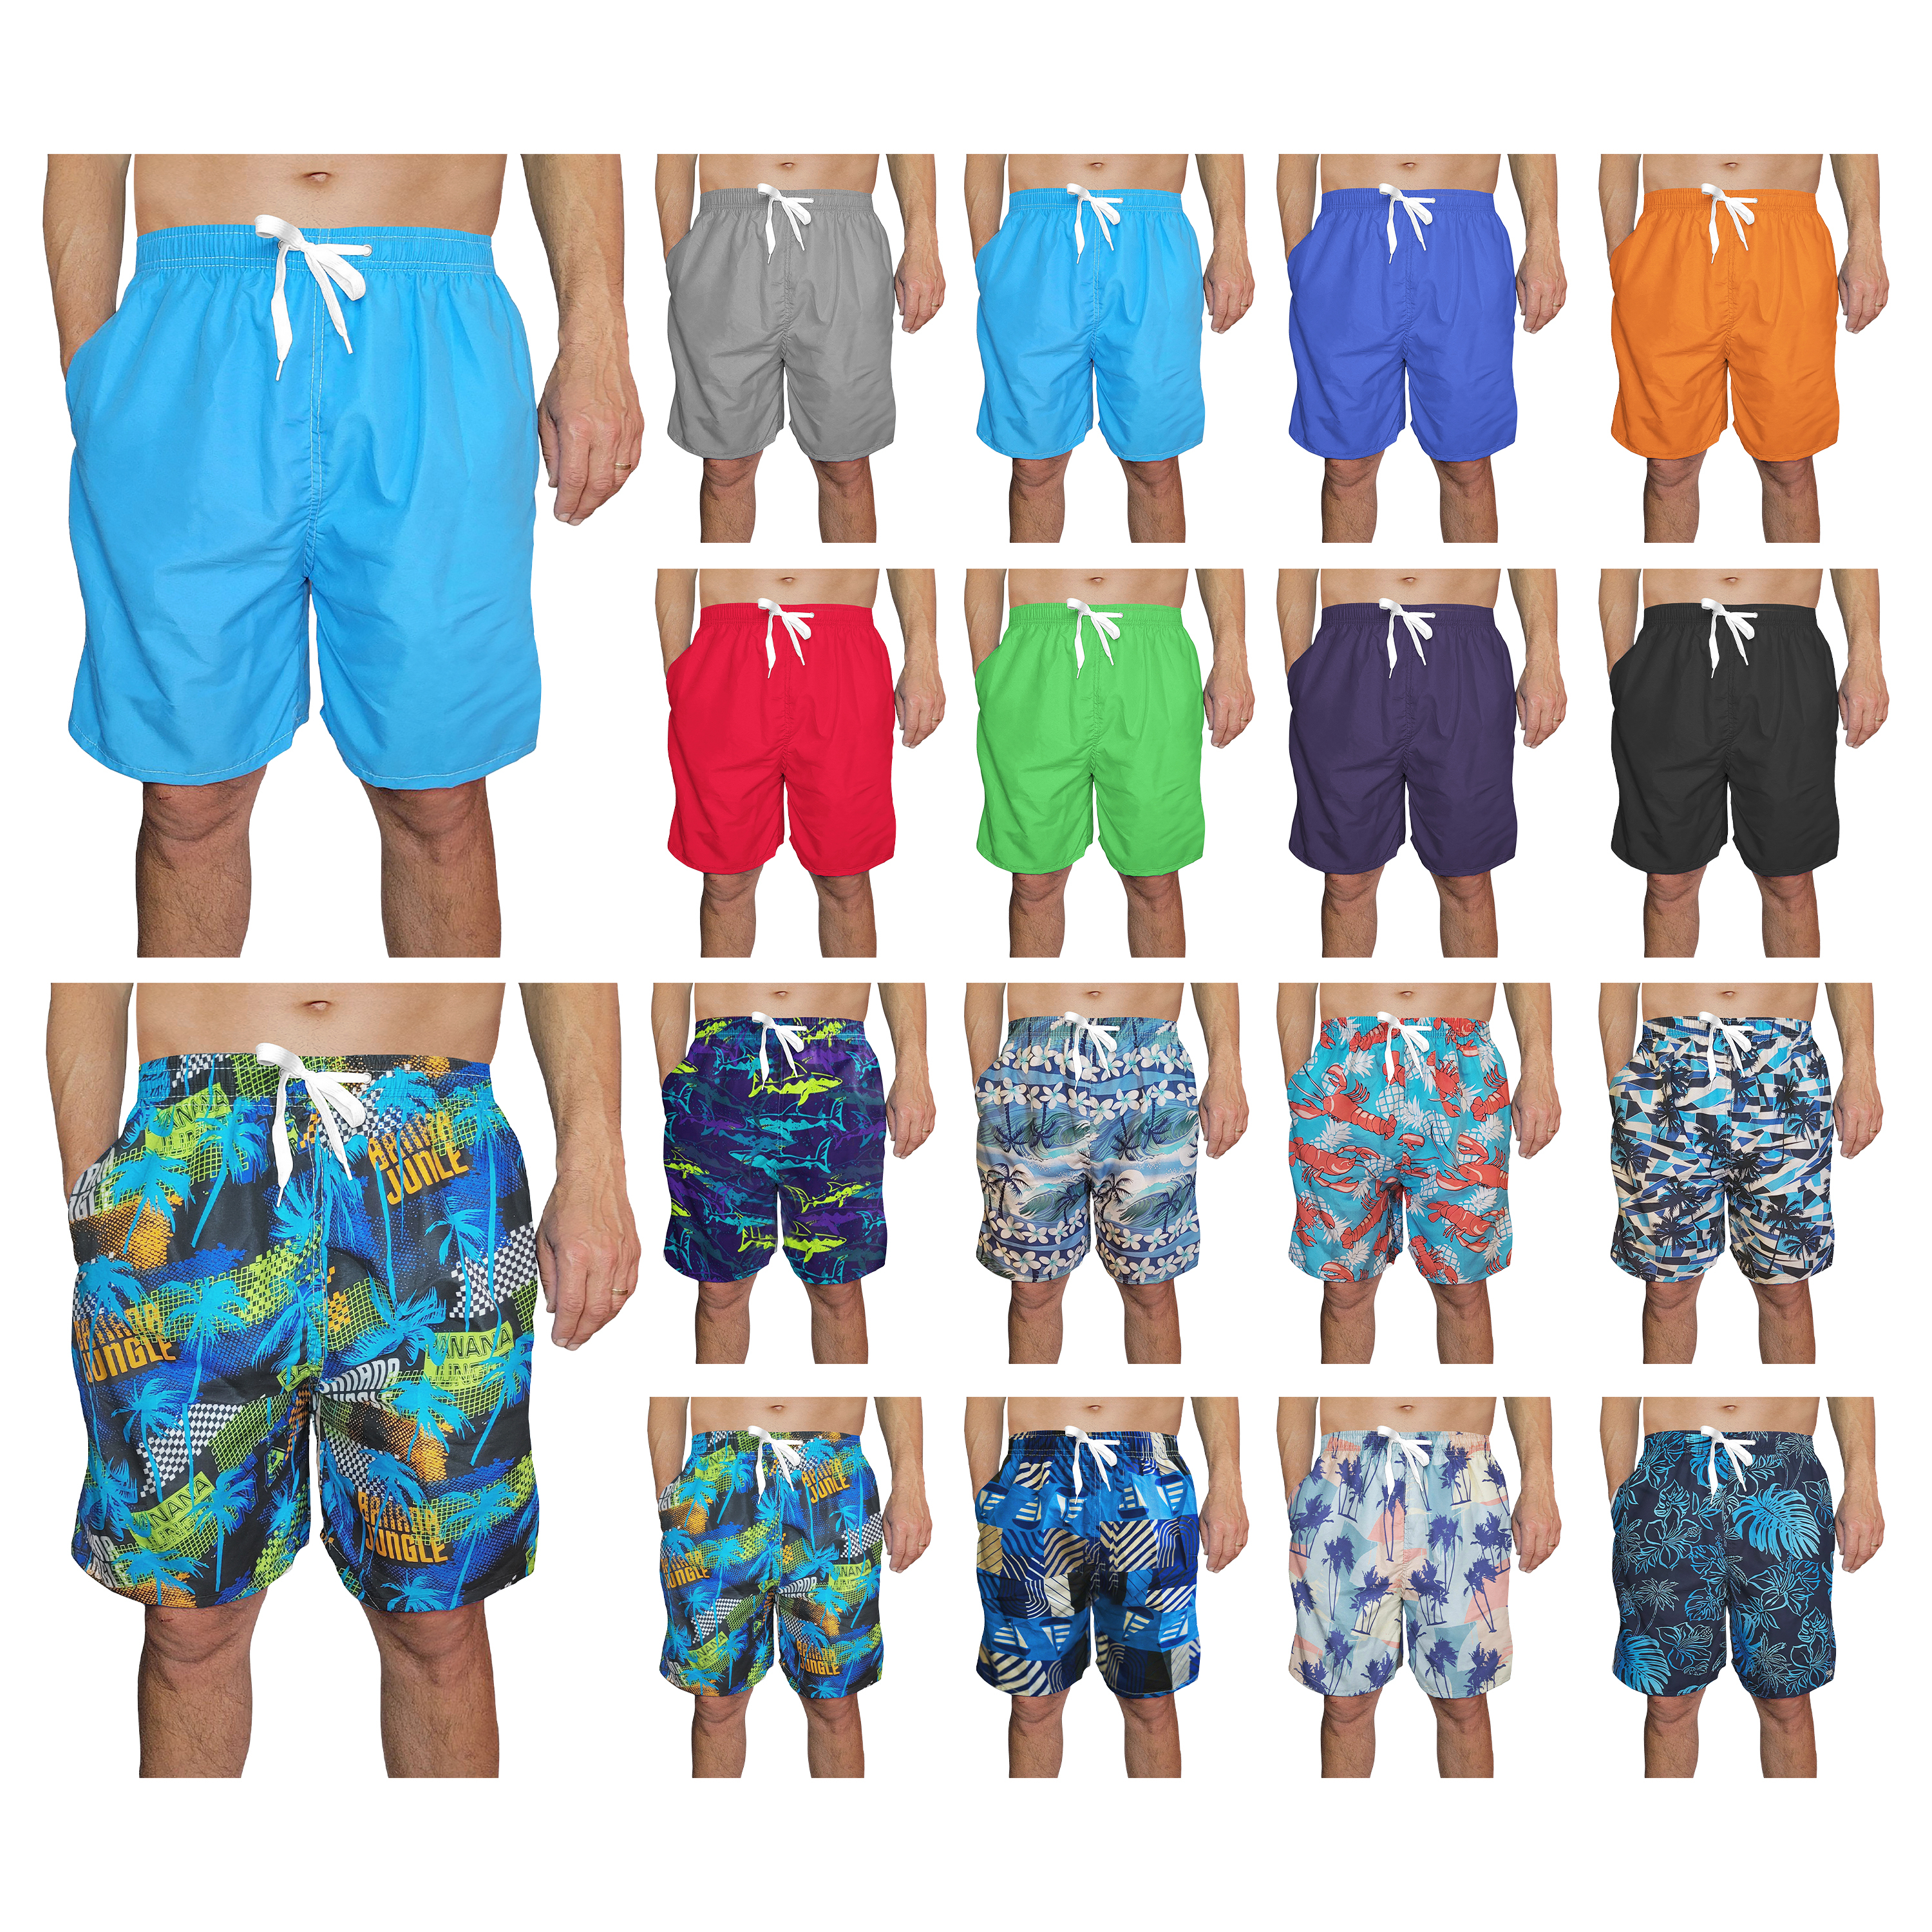 3-Pack: Men's Quick-Dry Solid & Printed Summer Beach Surf Board Swim Trunks Shorts - Medium, Printed